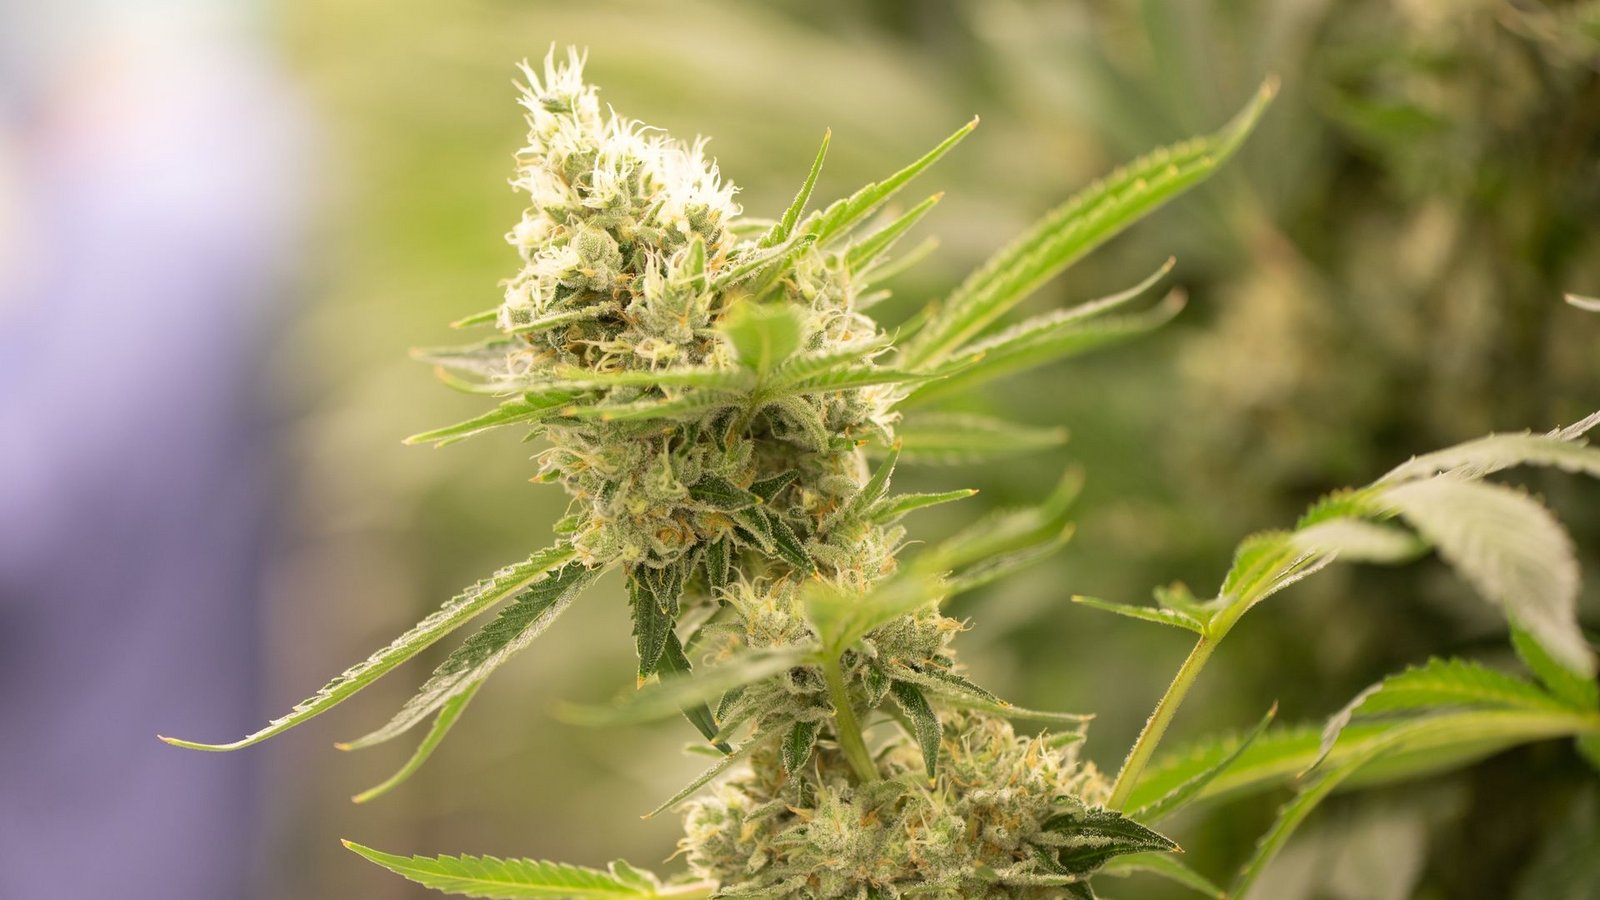 Cannabispflanzen könnten künftig nach vorgeschriebenen Standards angebaut werden.Foto: Sebastian Kahnert/dpa-Zentralbild/dpa